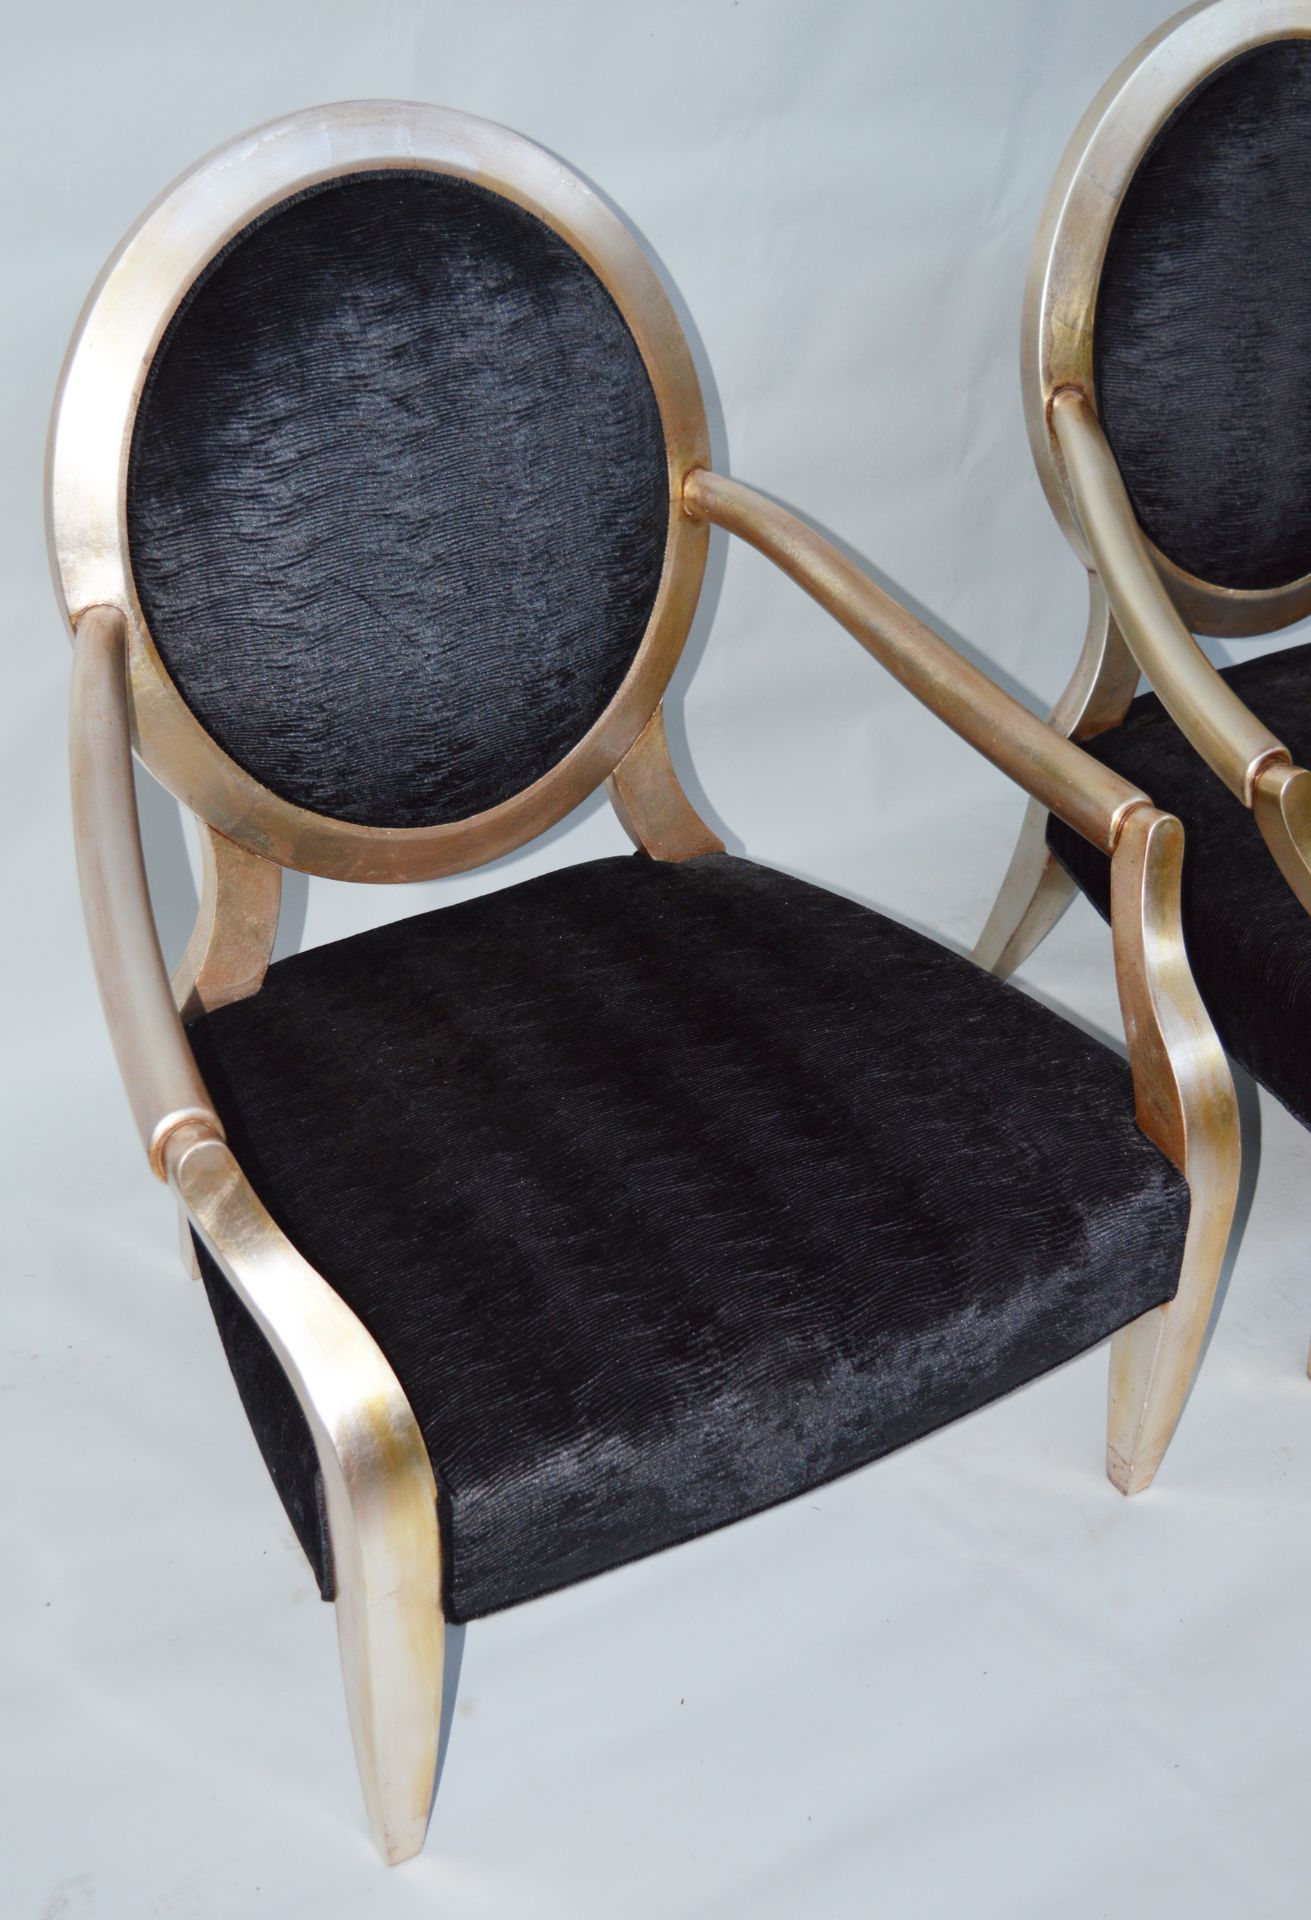 2 x Duresta Nero Chairs - individual Fabric - CL08 - Location Altrincham, WA14 - Image 2 of 7